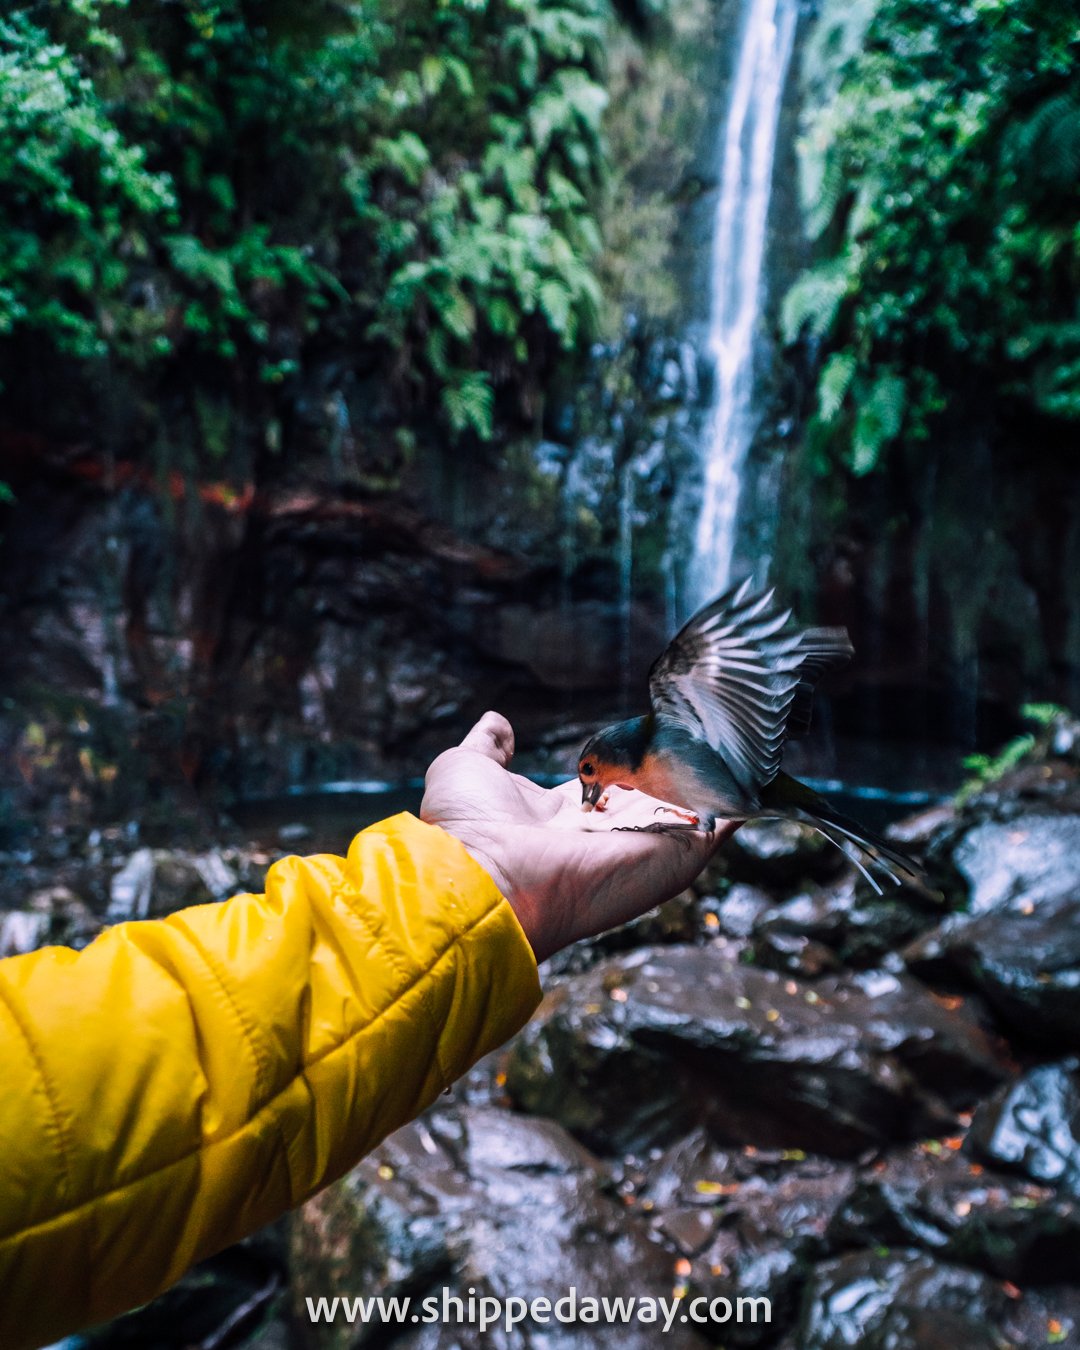 Feeding friendly birds at 25 Fontes waterfall